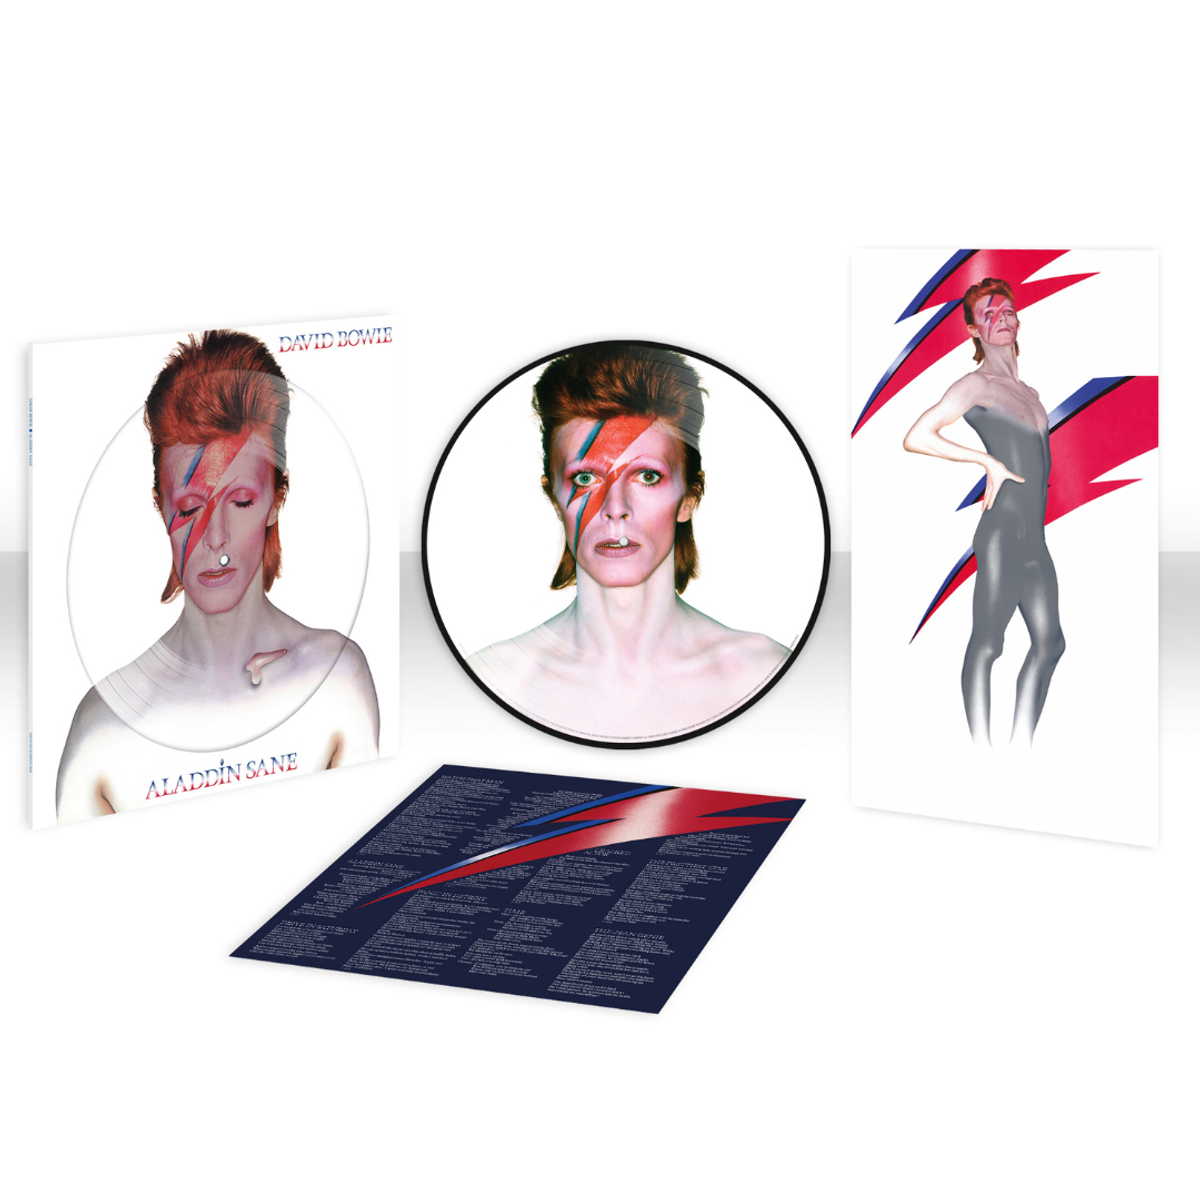 Aladdin Sane 50th Anniversary Picture Disc LP - David Bowie